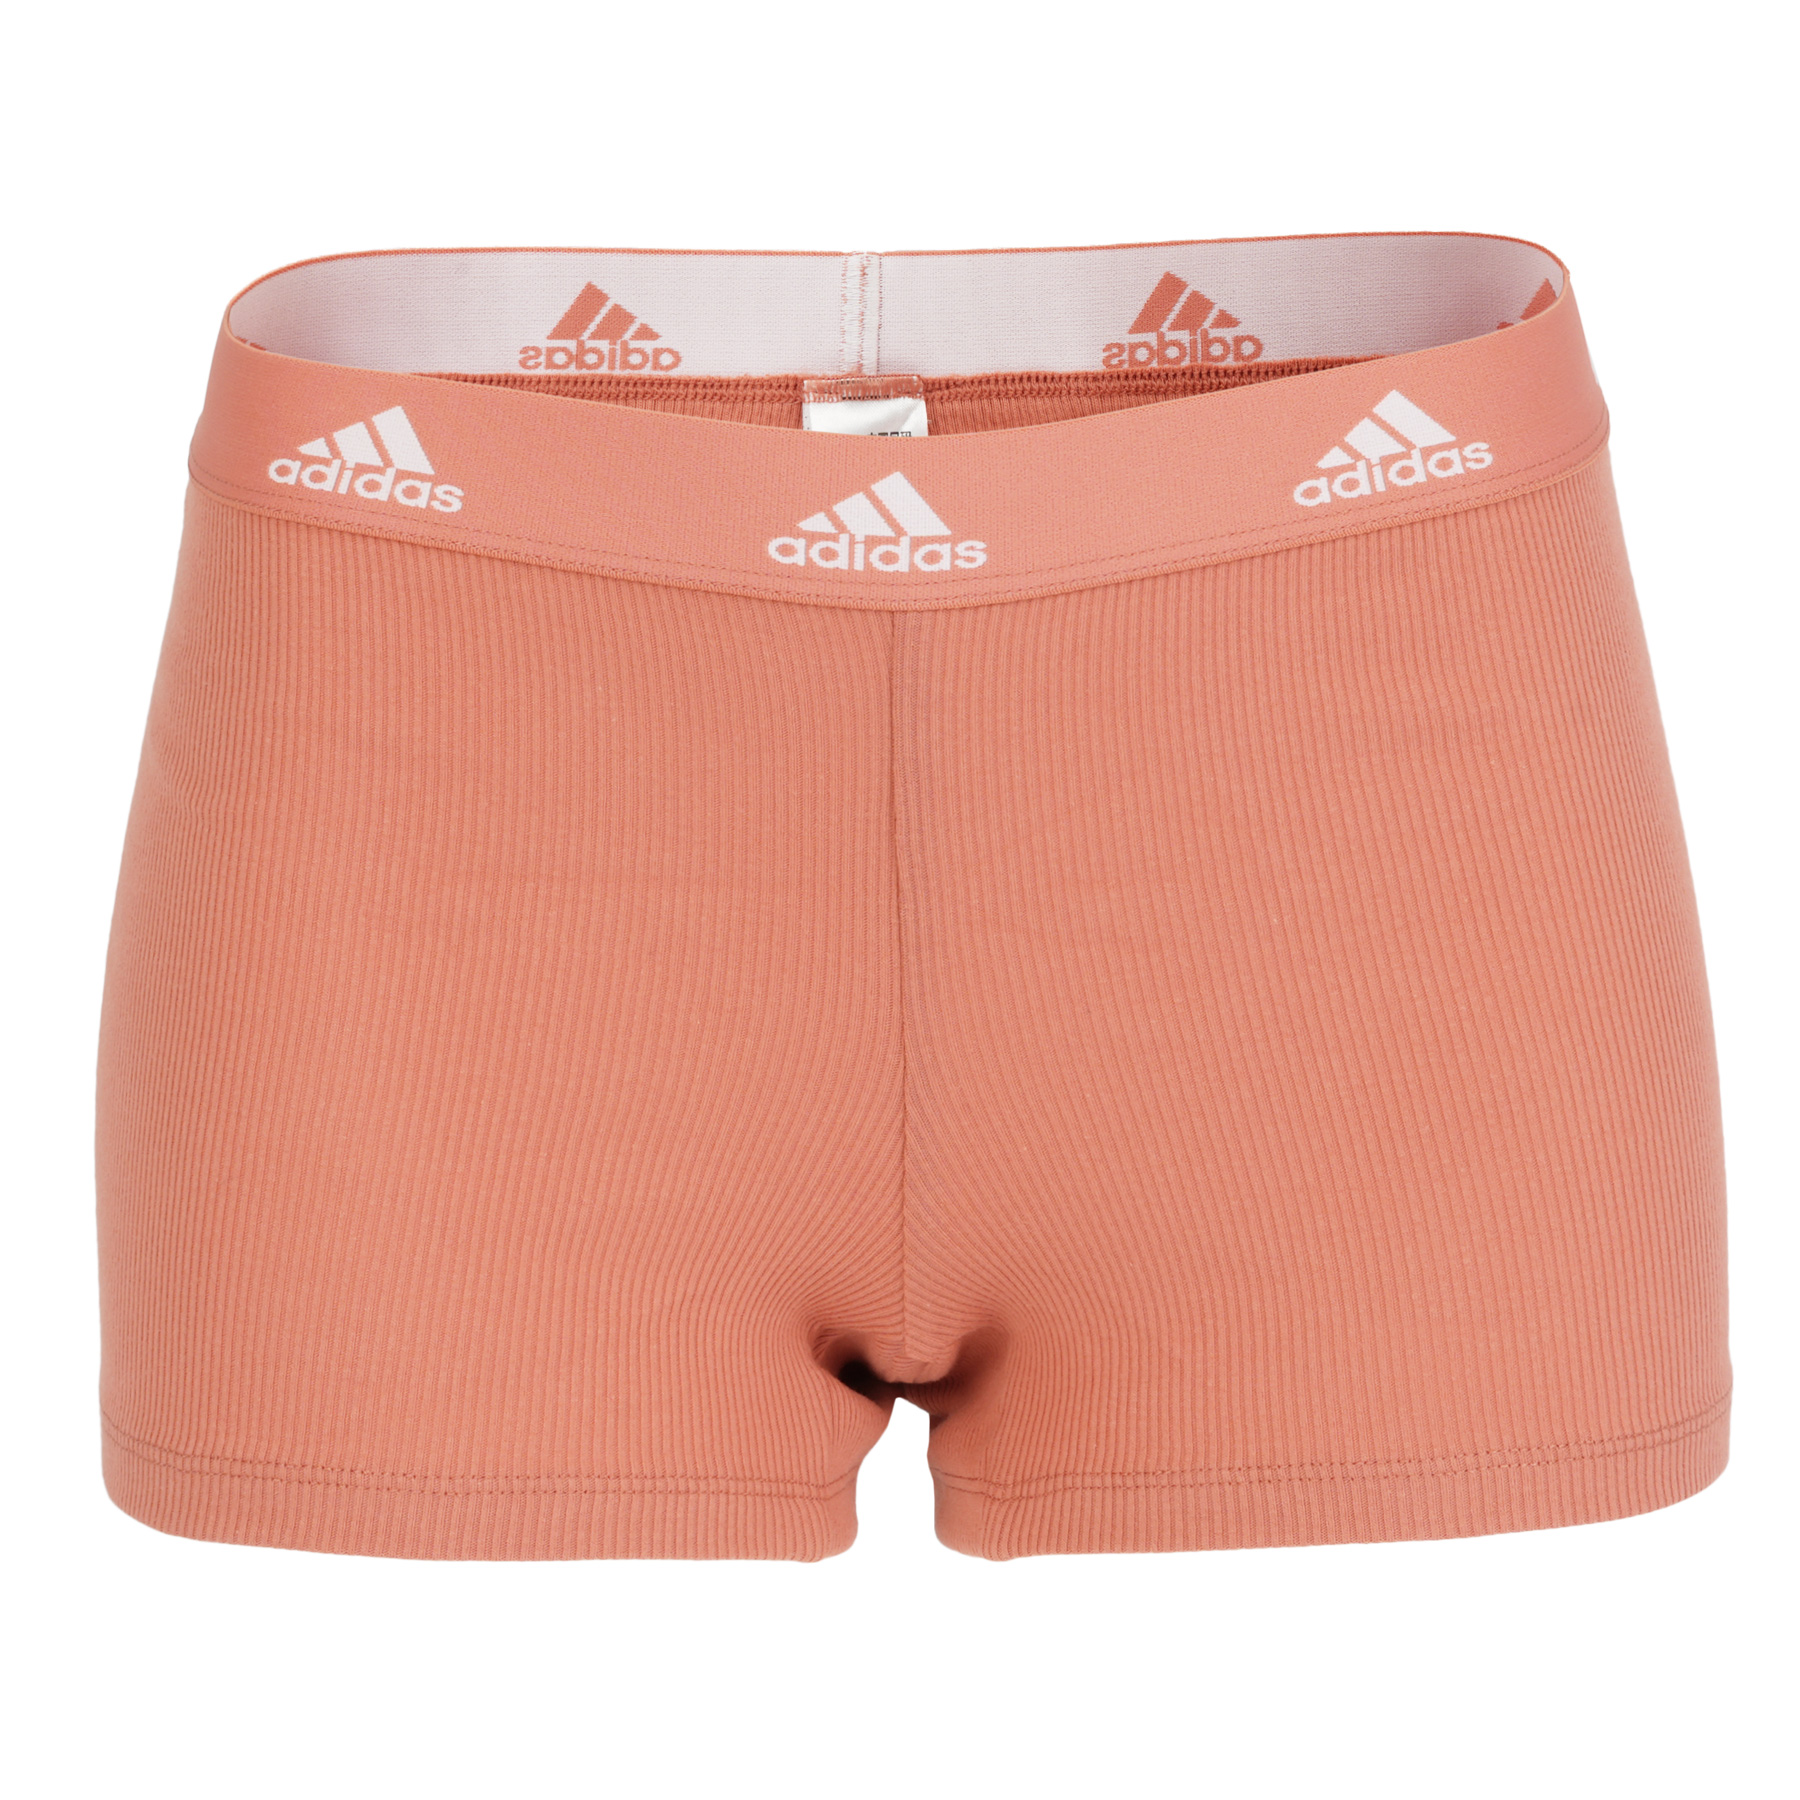 Productfoto van adidas Sports Underwear Rib 2x2 Cotton Boxershorts Dames - 523 - wonder clay